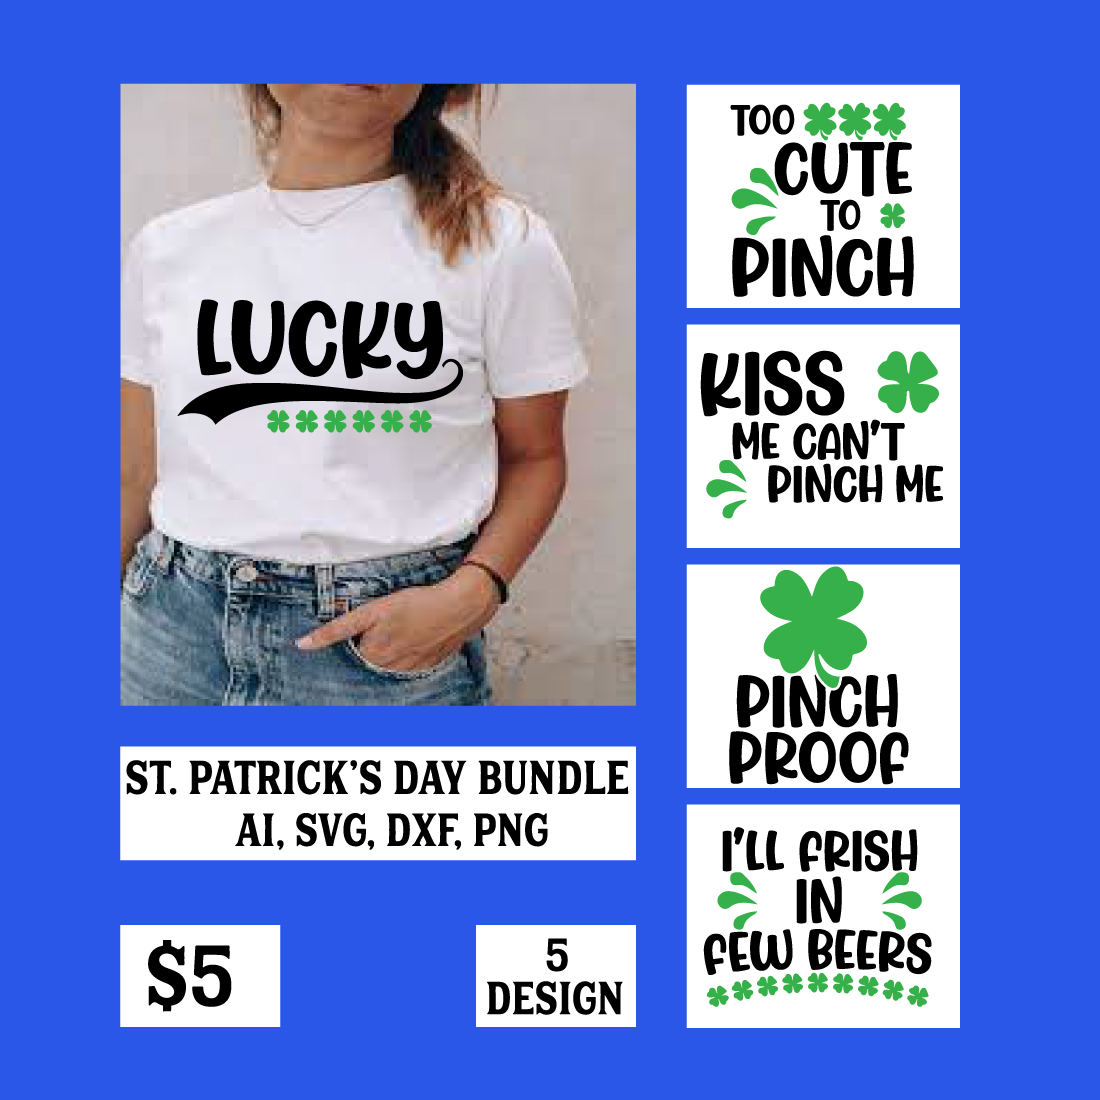 5st patrick's day t-shirt design bundle cover image.